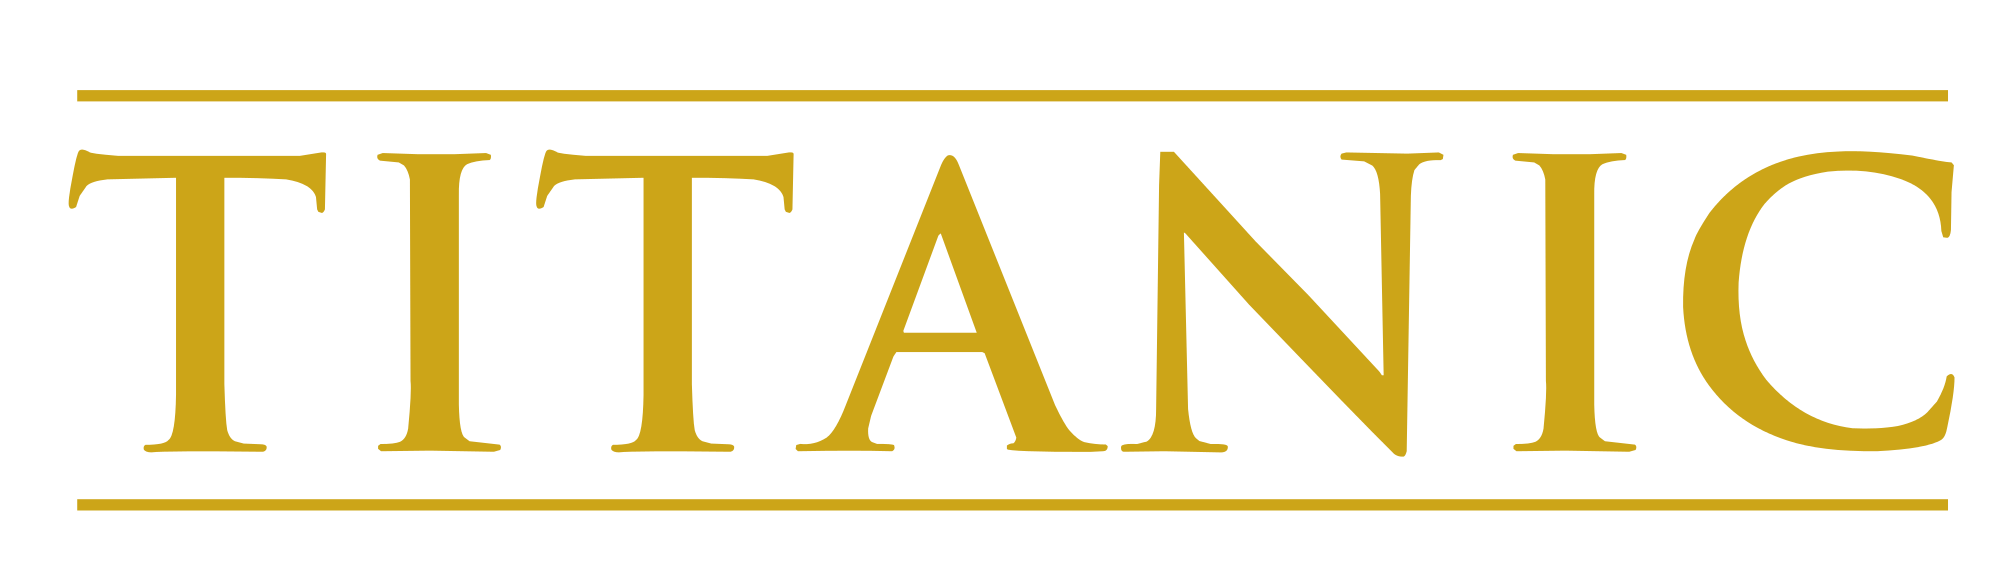 تيتانيك logo PNG تحميل مجاني